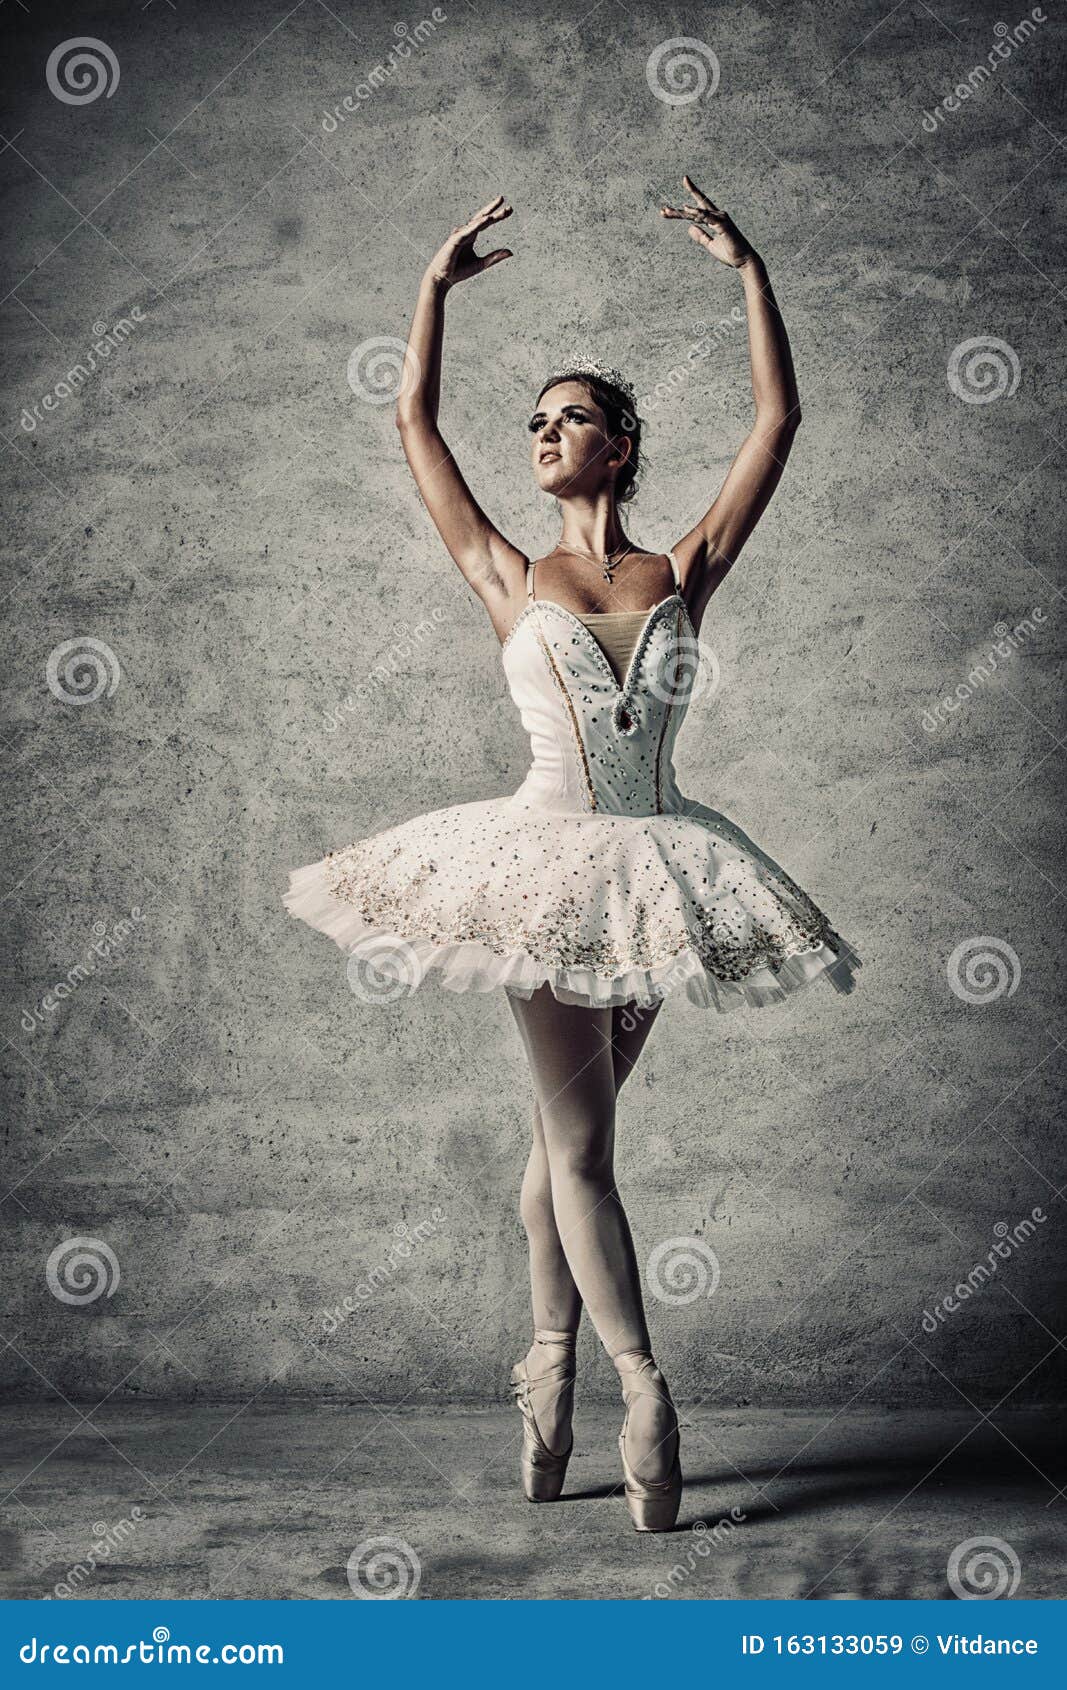 Ballerina Pointe in Pose. Ballet, Dance, Theater, Stock Image - Image dance, 163133059